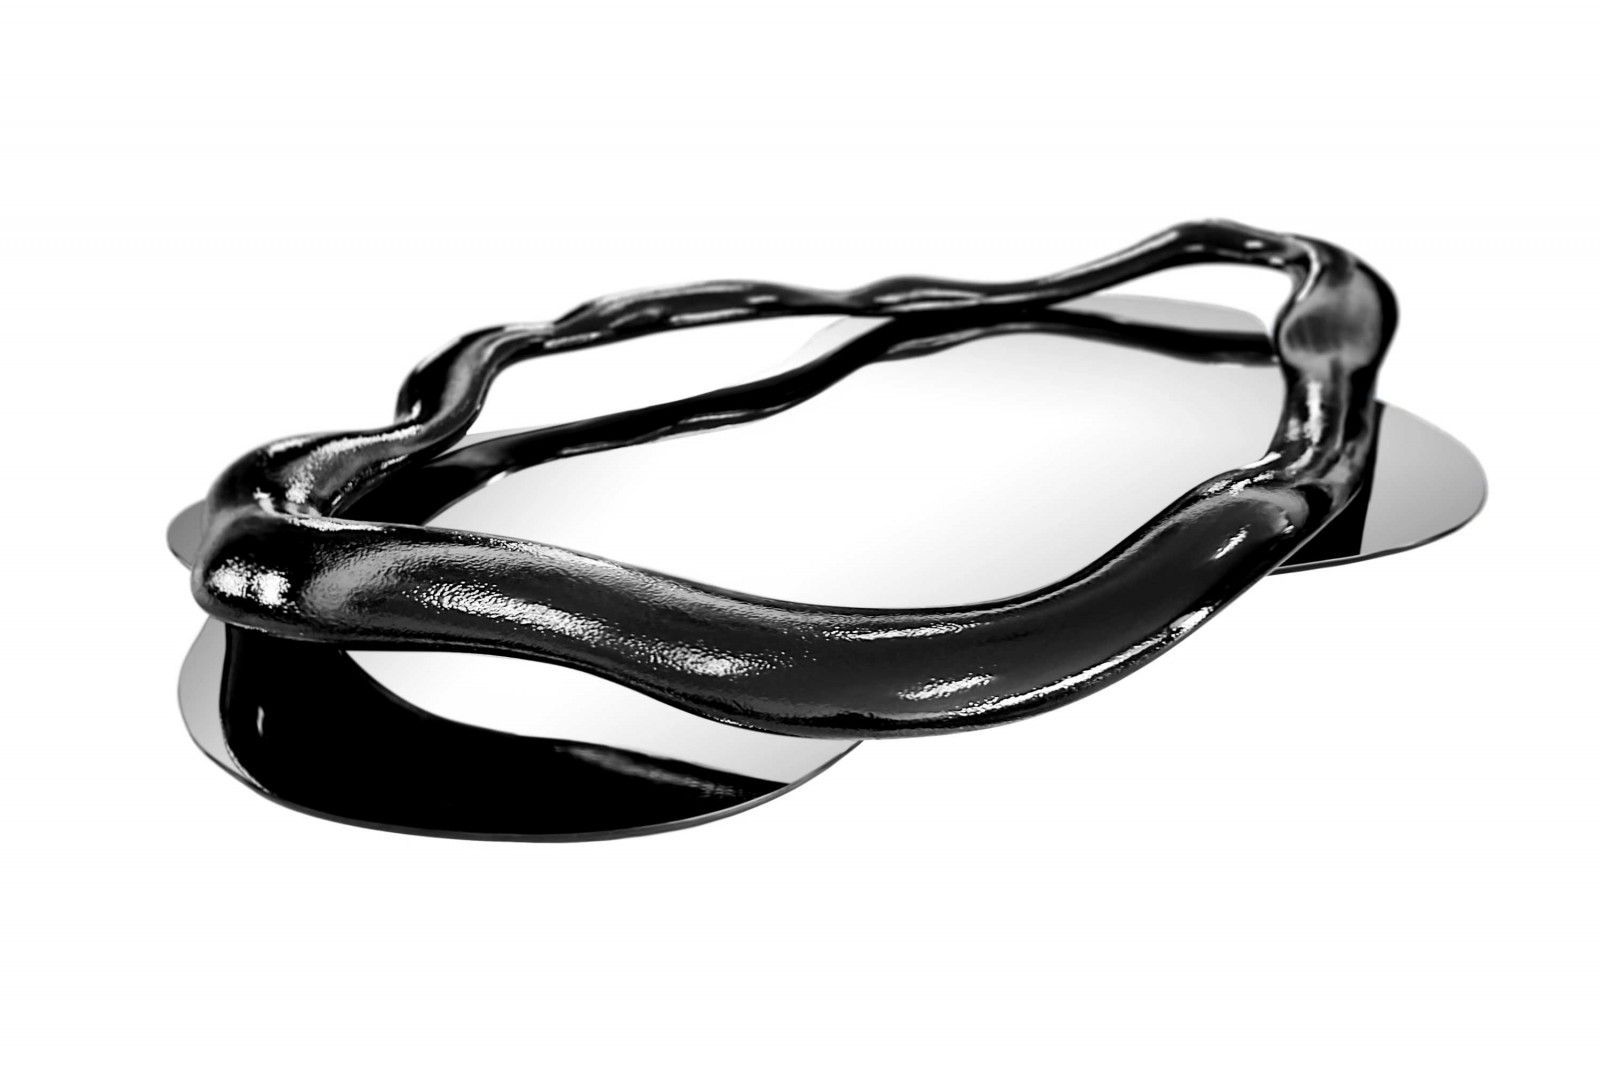 mirror-exclusive-sculptural-luxurious-organic-black-high-gloss-twisted-big-karpa-2-2391-1600-1400-100